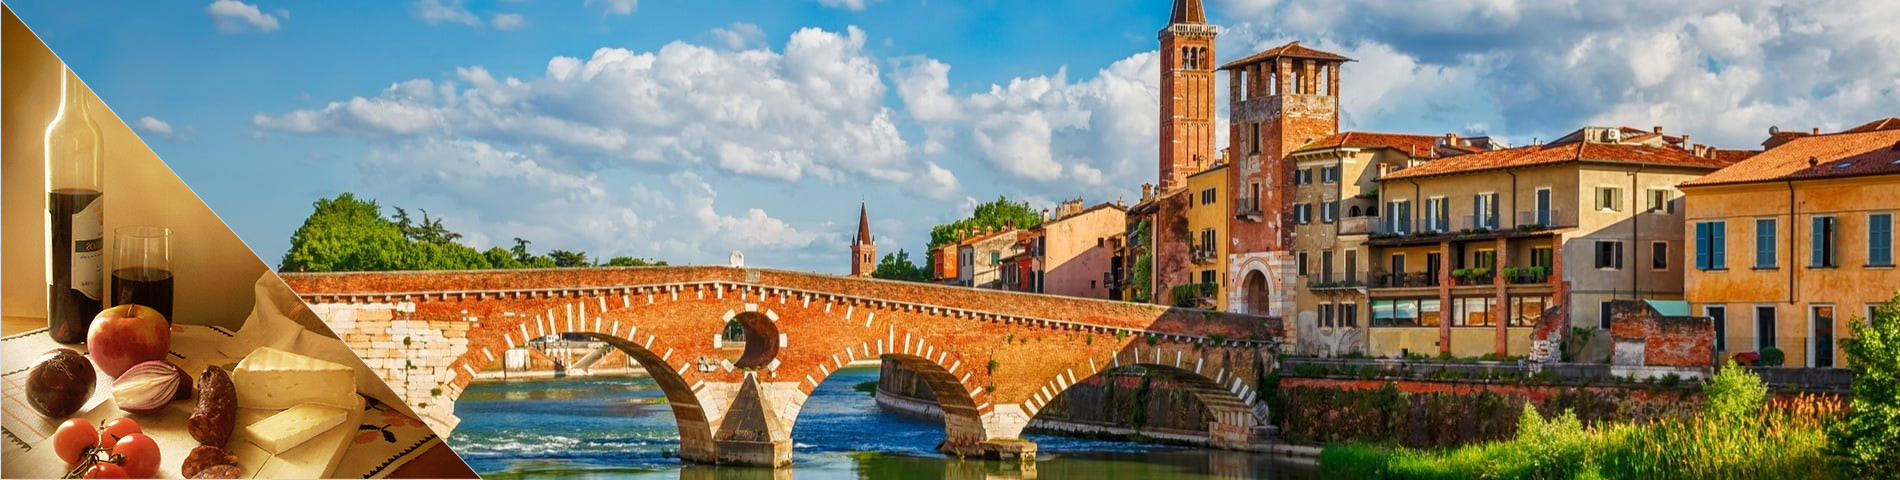 Verona - Italienisch & Kultur